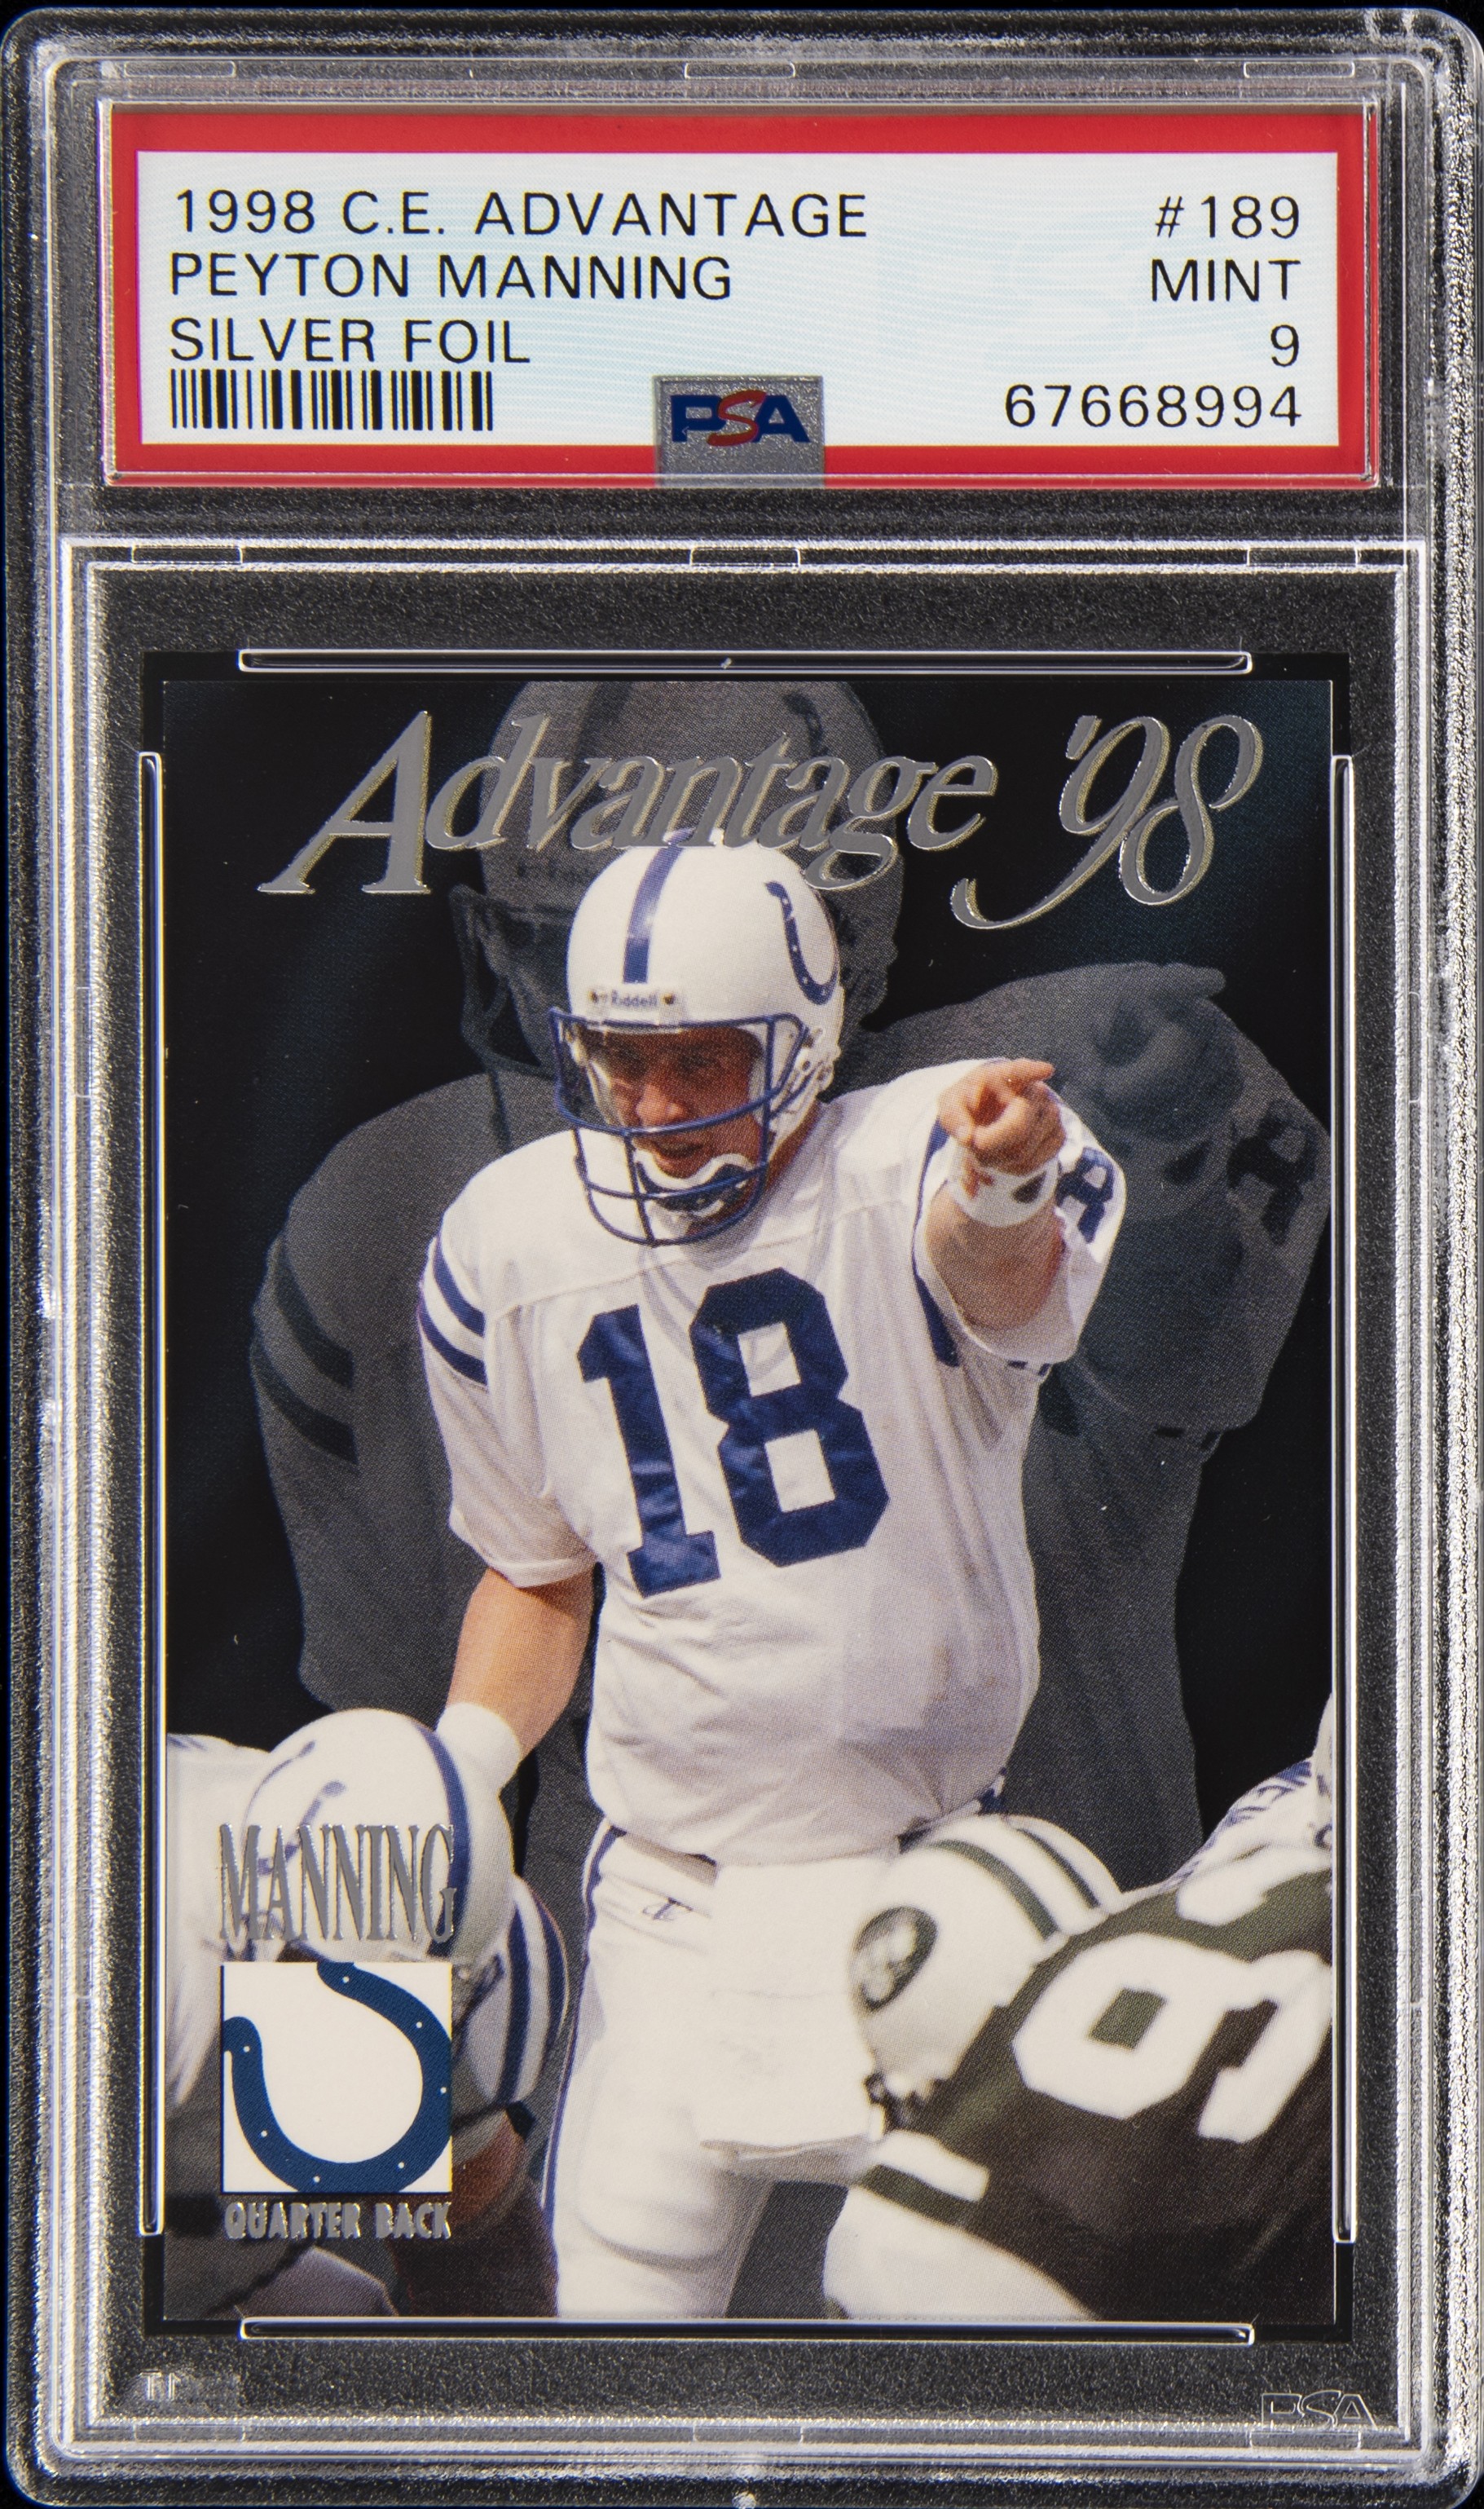 1998 Collector's Edge Advantage Silver Foil #189 Peyton Manning Rookie Card - PSA MINT 9